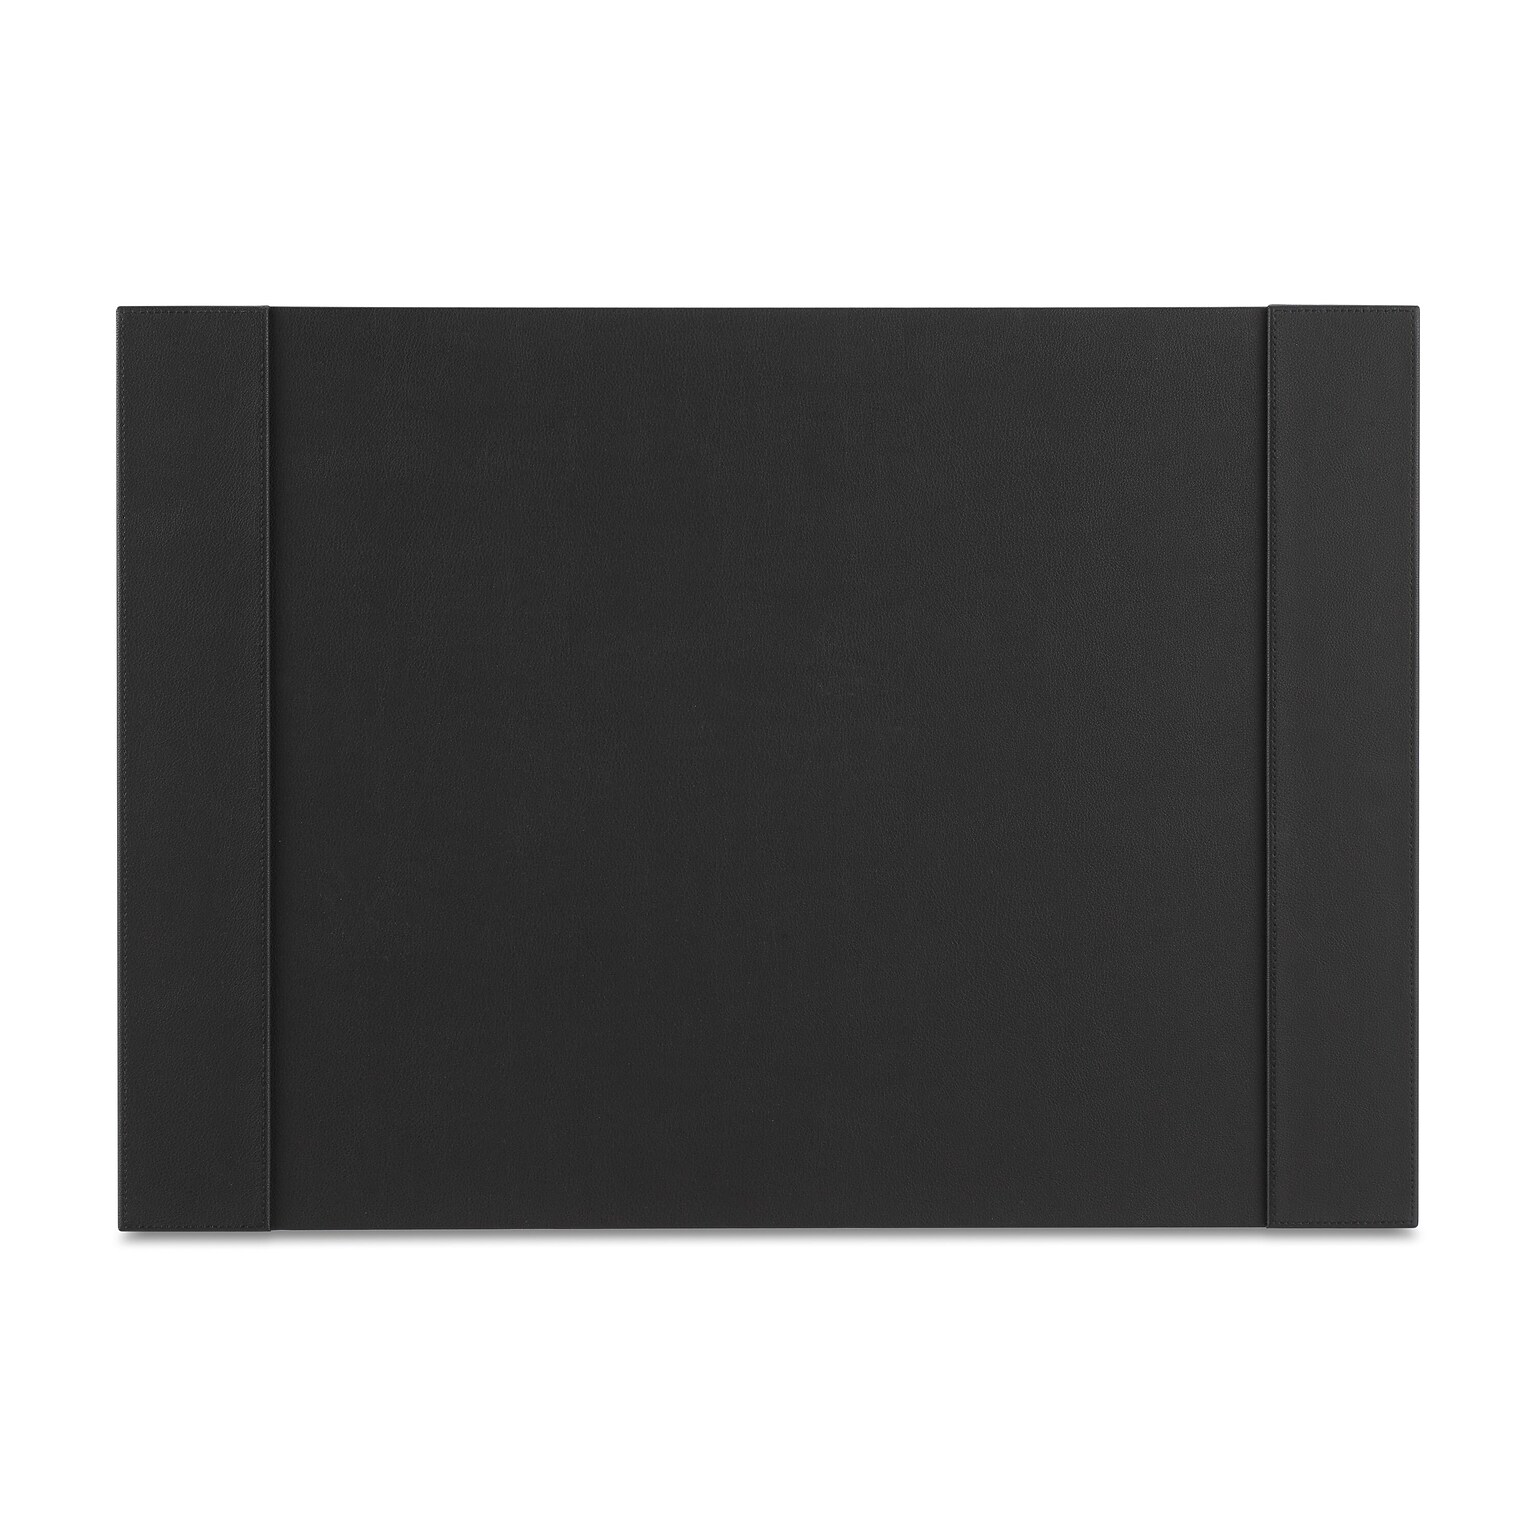 Staples Refillable Faux leather Desk Pad with Side Rail, 24 x 17, Black (ST45058-CC)